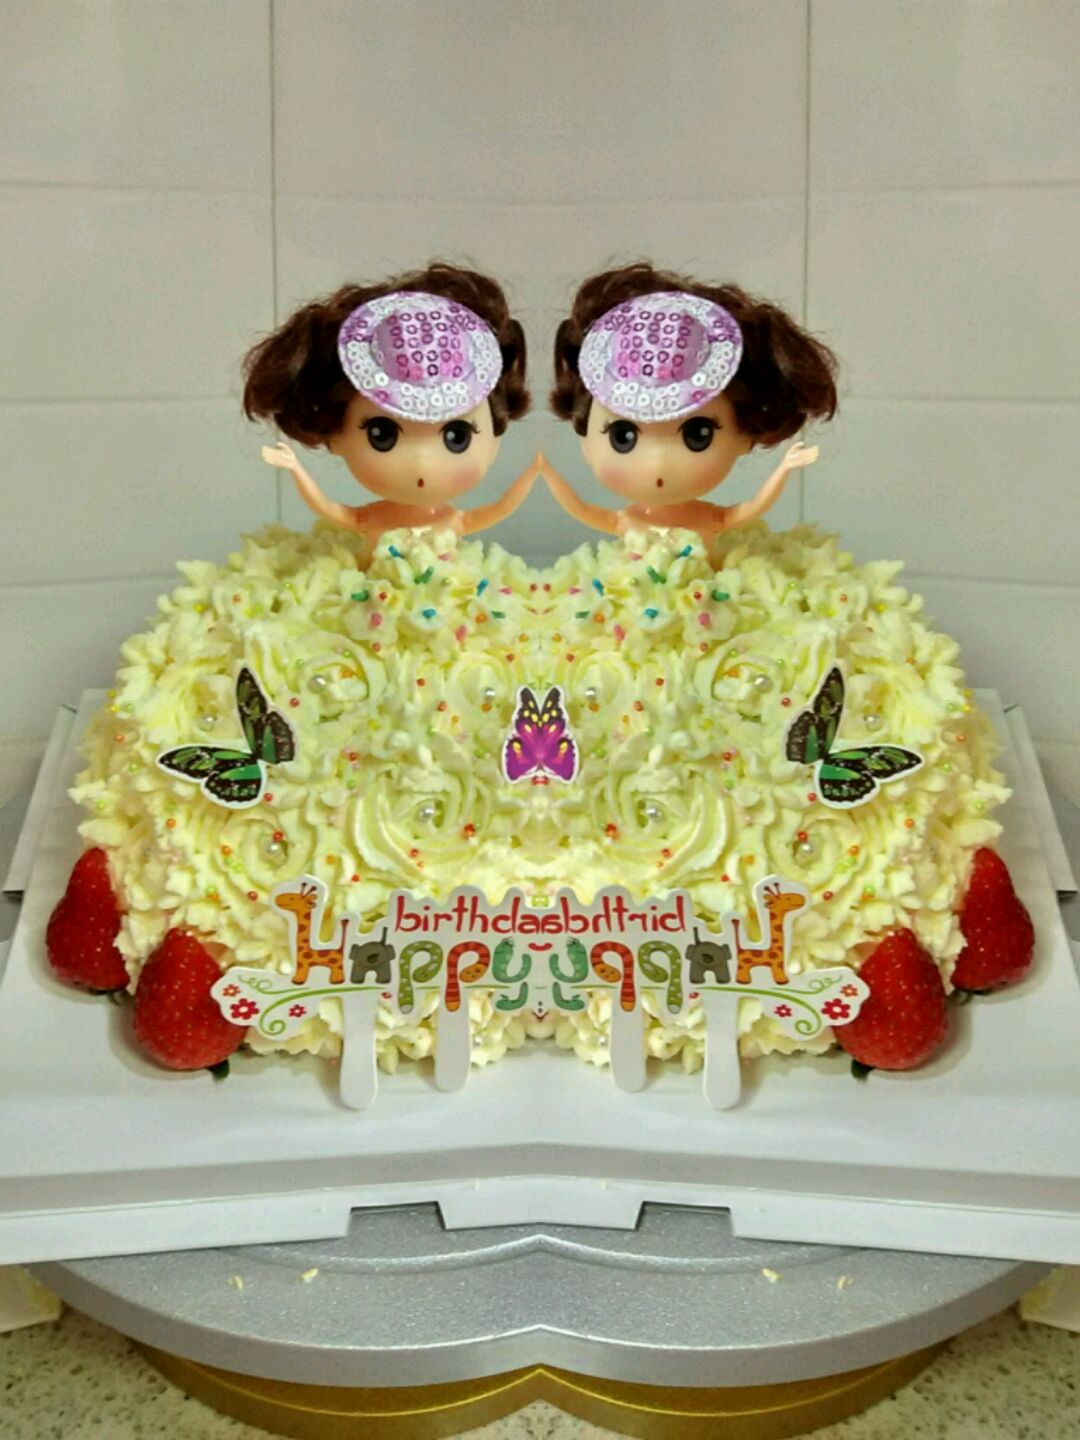 Hippomama's Kitchen 怡。然自得: 公主蛋糕 Princess Birthday Cake